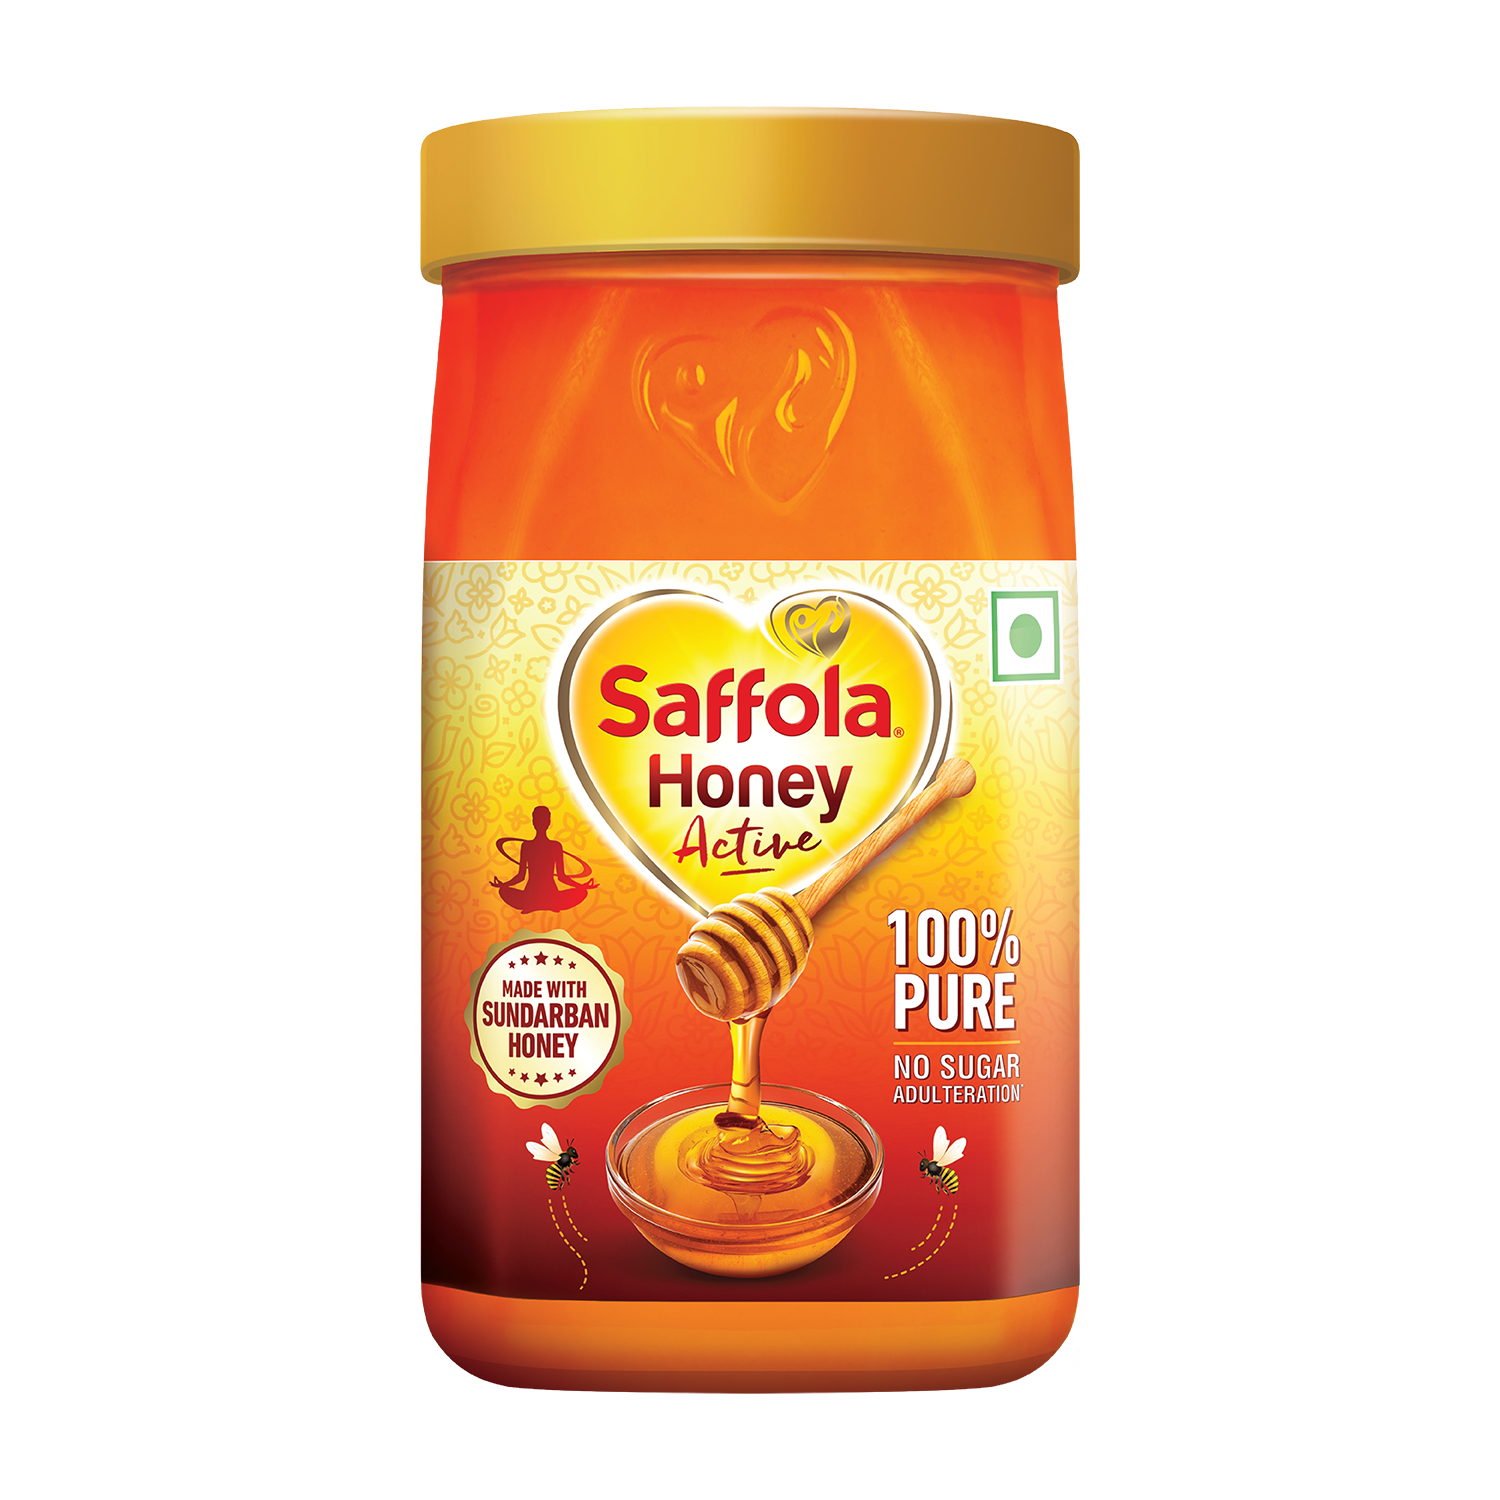 Breakfast Combo (Saffola Fittify Tasty Peanut Butter Dark Chocolaty Extra Crunchy 1250g + Saffola Oats 1kg + Saffola Honey Active Pet Jar 1kg